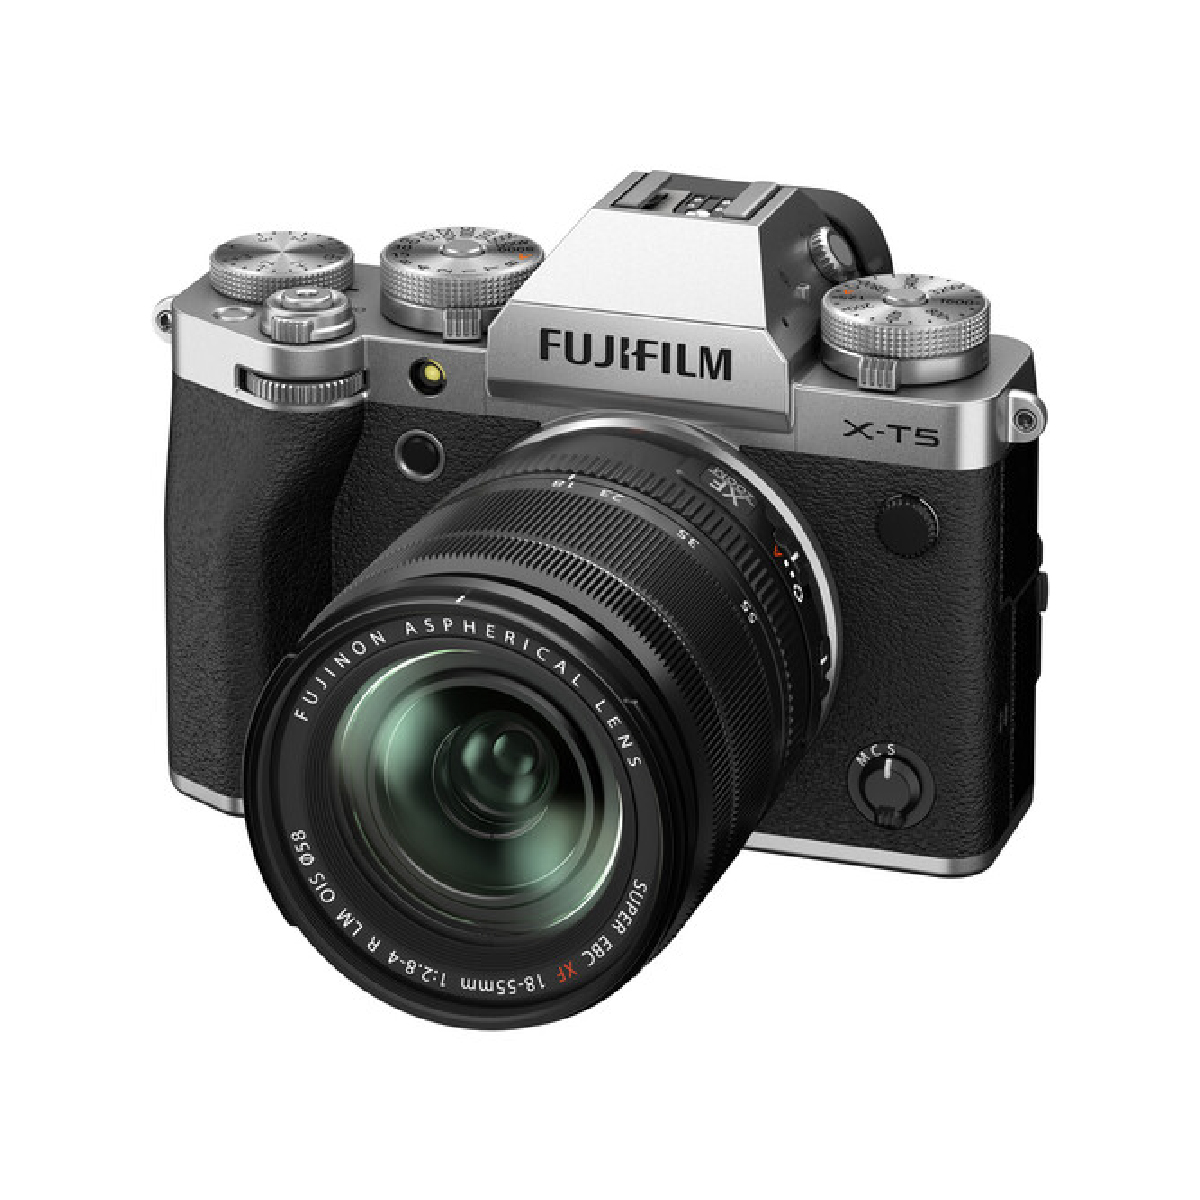 Fujifilm X-T5 – Mirrorless Camera Body with 18-55mm Lens – Silver (9)